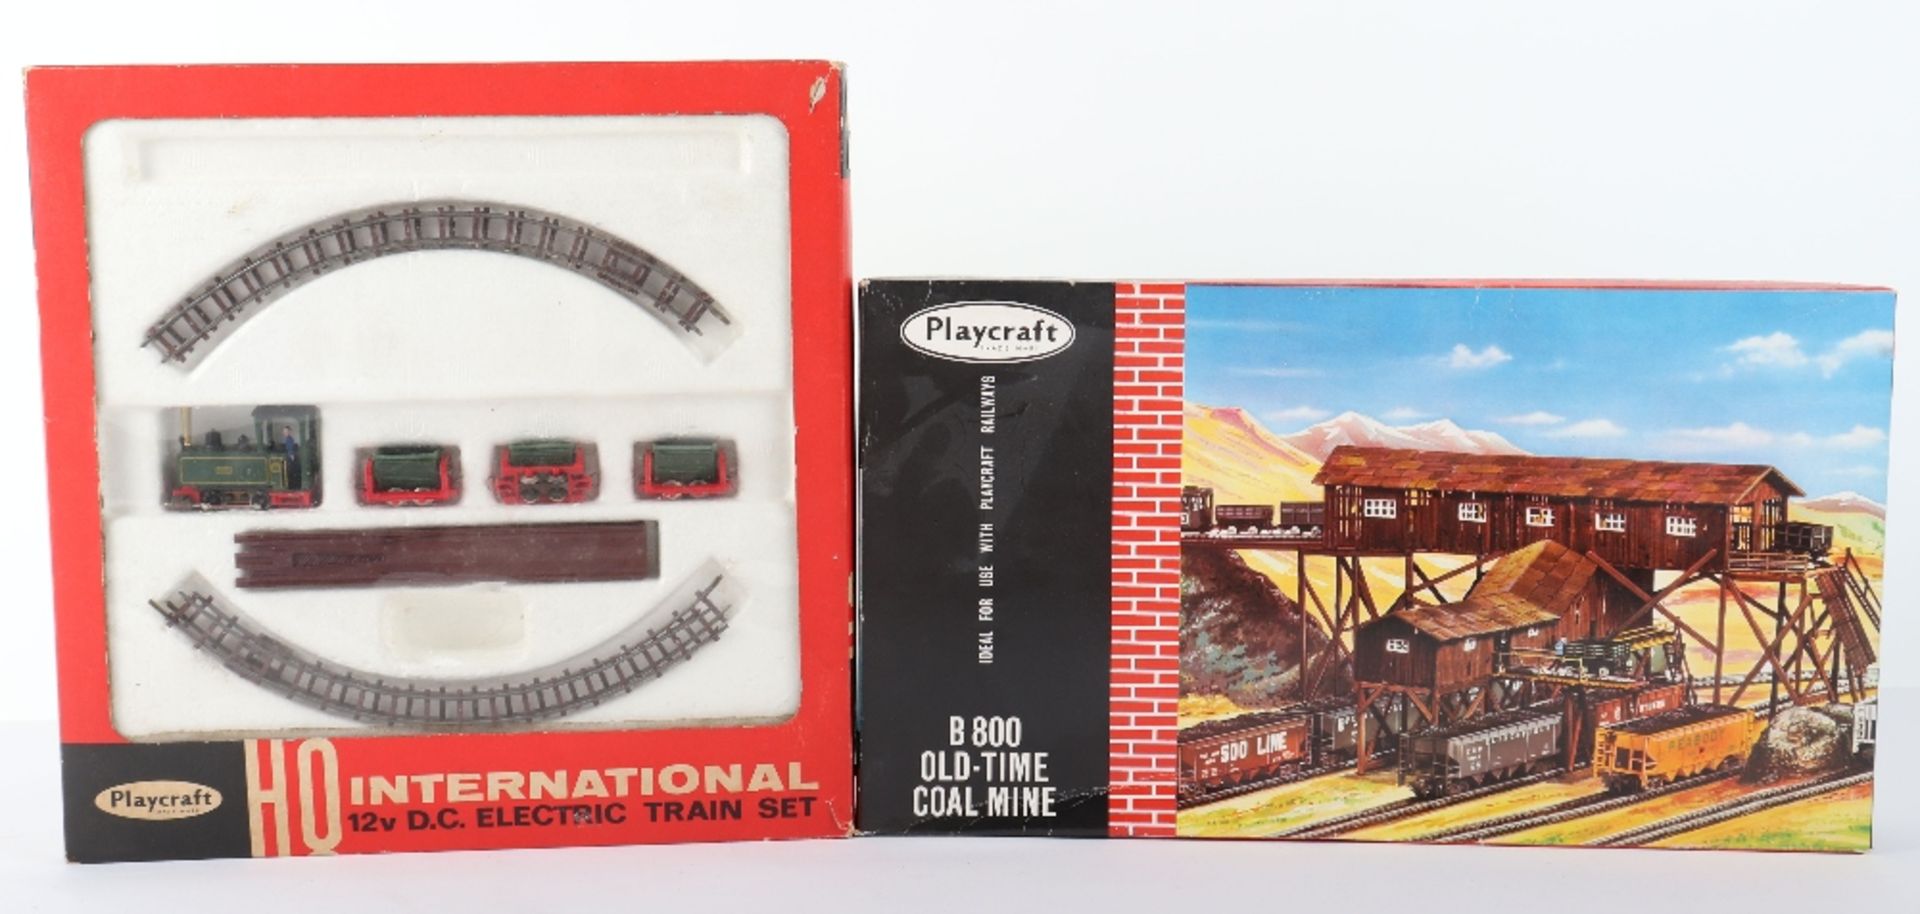 Playcraft HO Miniature narrow gauge train set